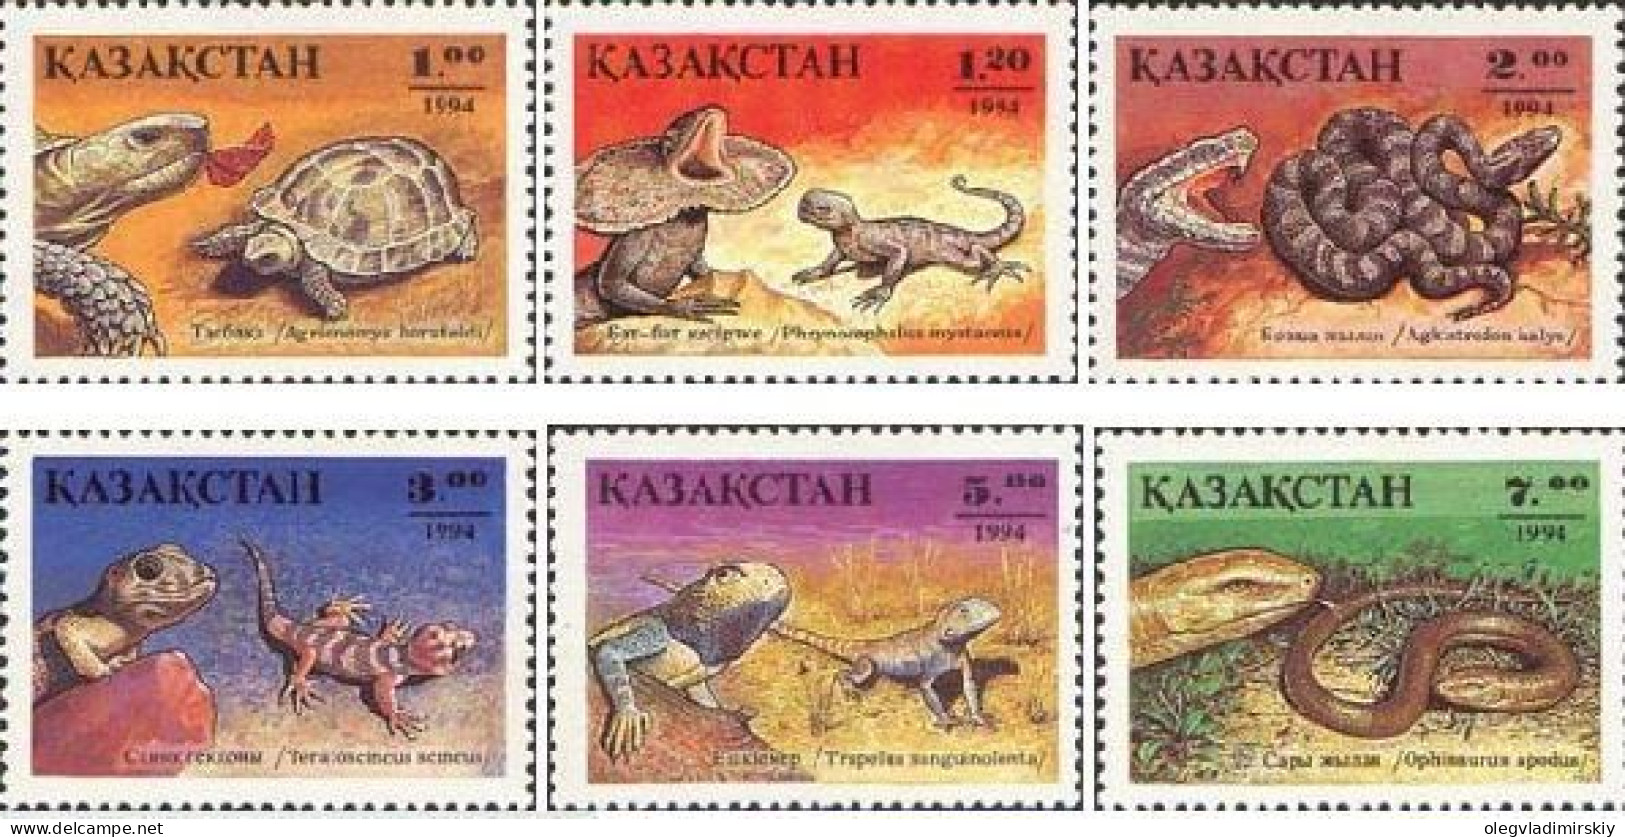 Kazakhstan 1994 Reptilies And Amphibians Rare Fauna Set Of 6 Stamps MNH - Kazakhstan